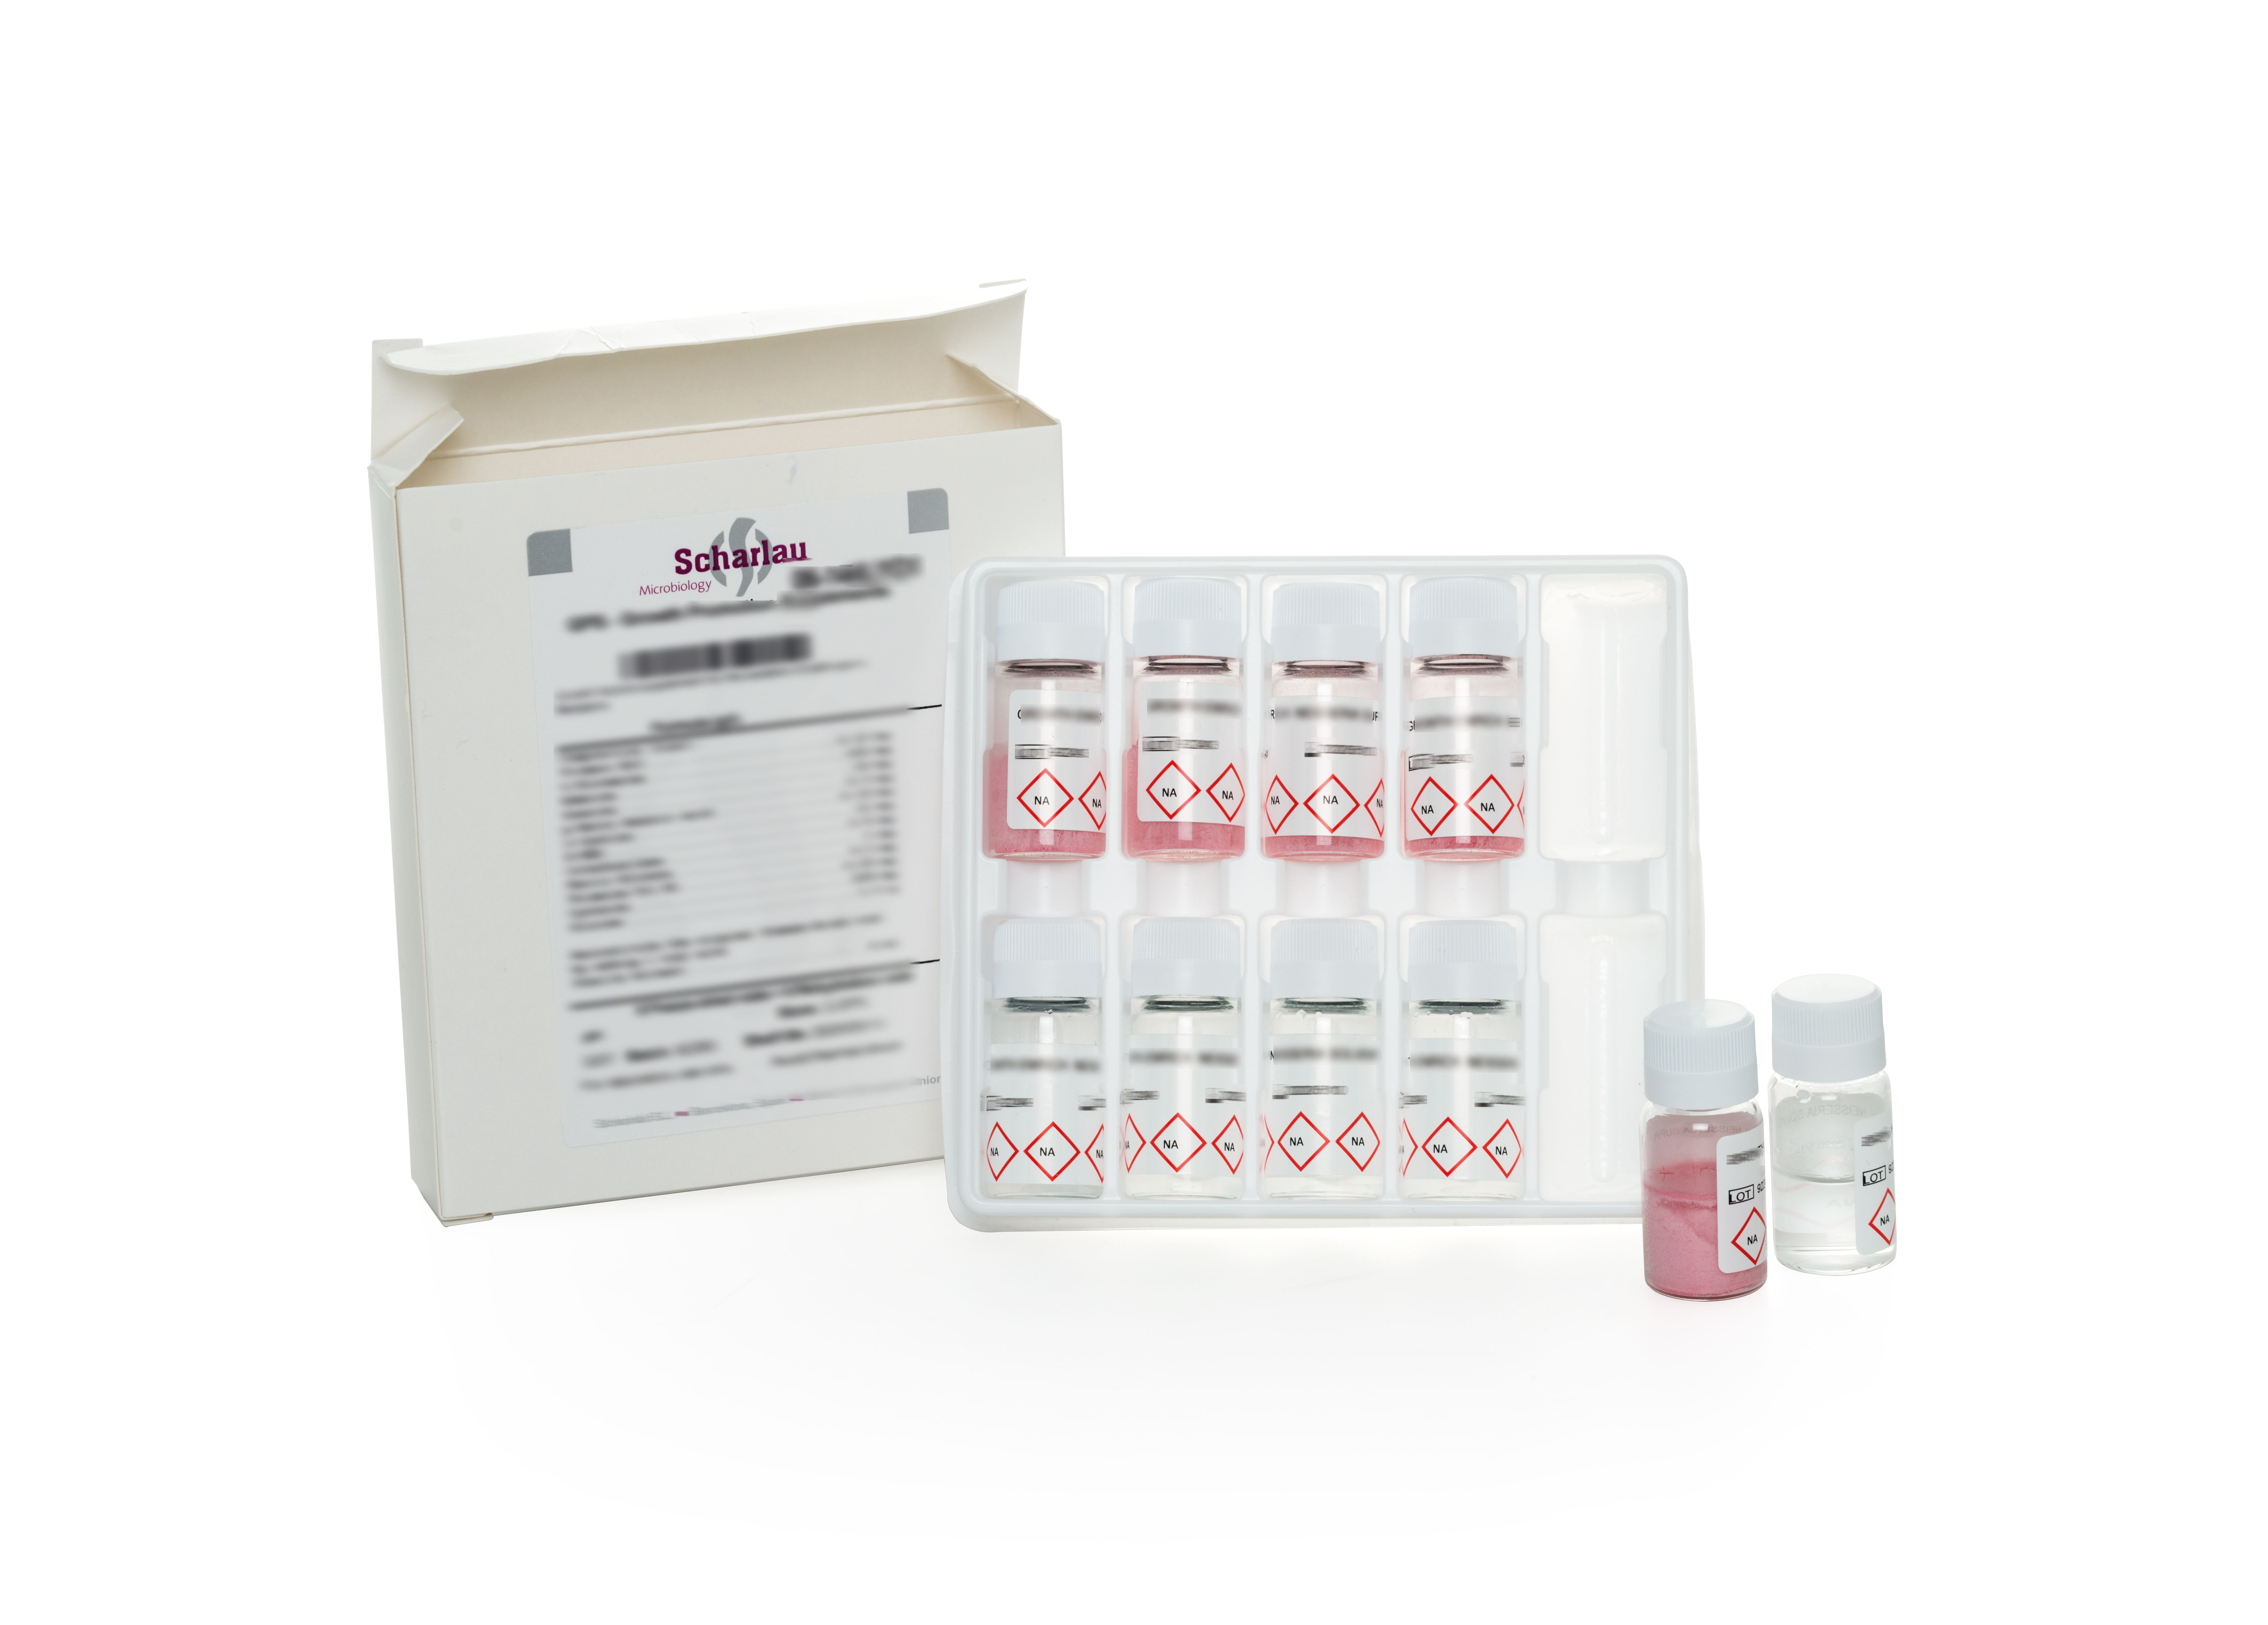 MUG Fluorescent Supplement. Sterile supplement used for Escherichia coli detection.